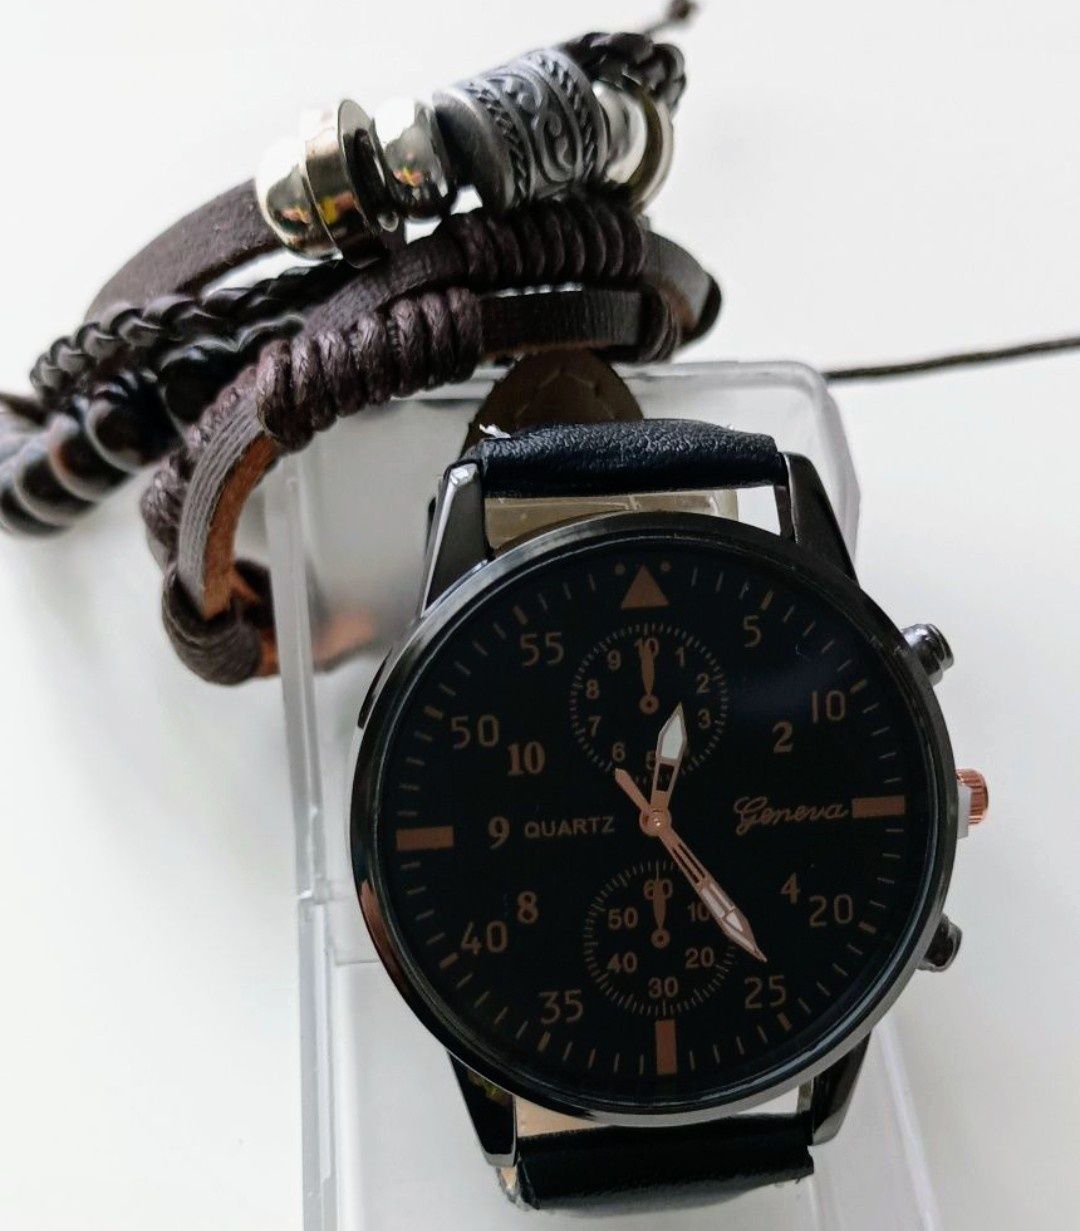 Zegarek męski plus zestaw bransoletek Nowy